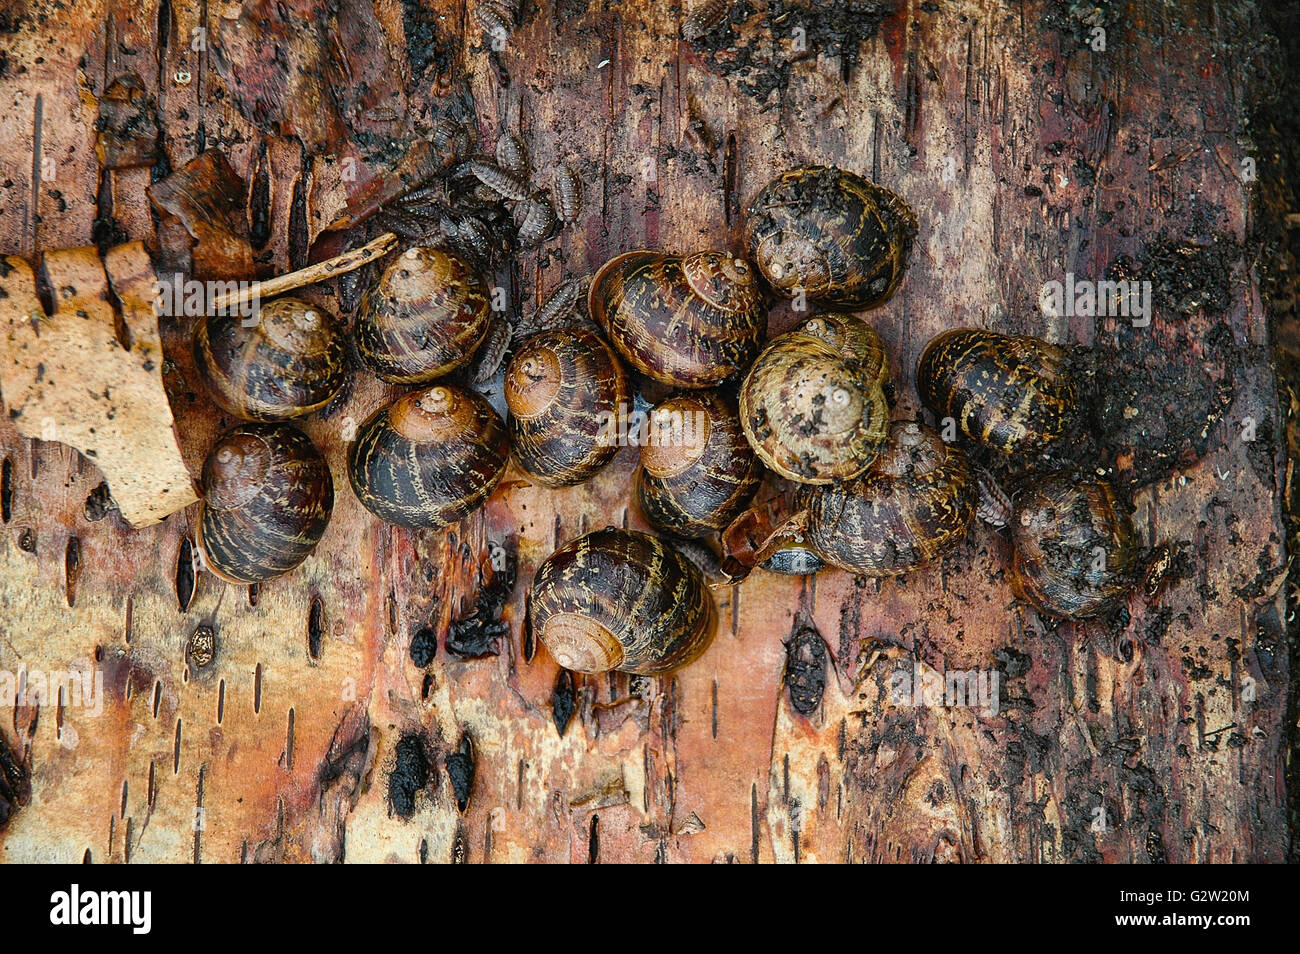 Garden Snail (Cornu aspersum) on a tree trunk in its natural habitat Stock Photo